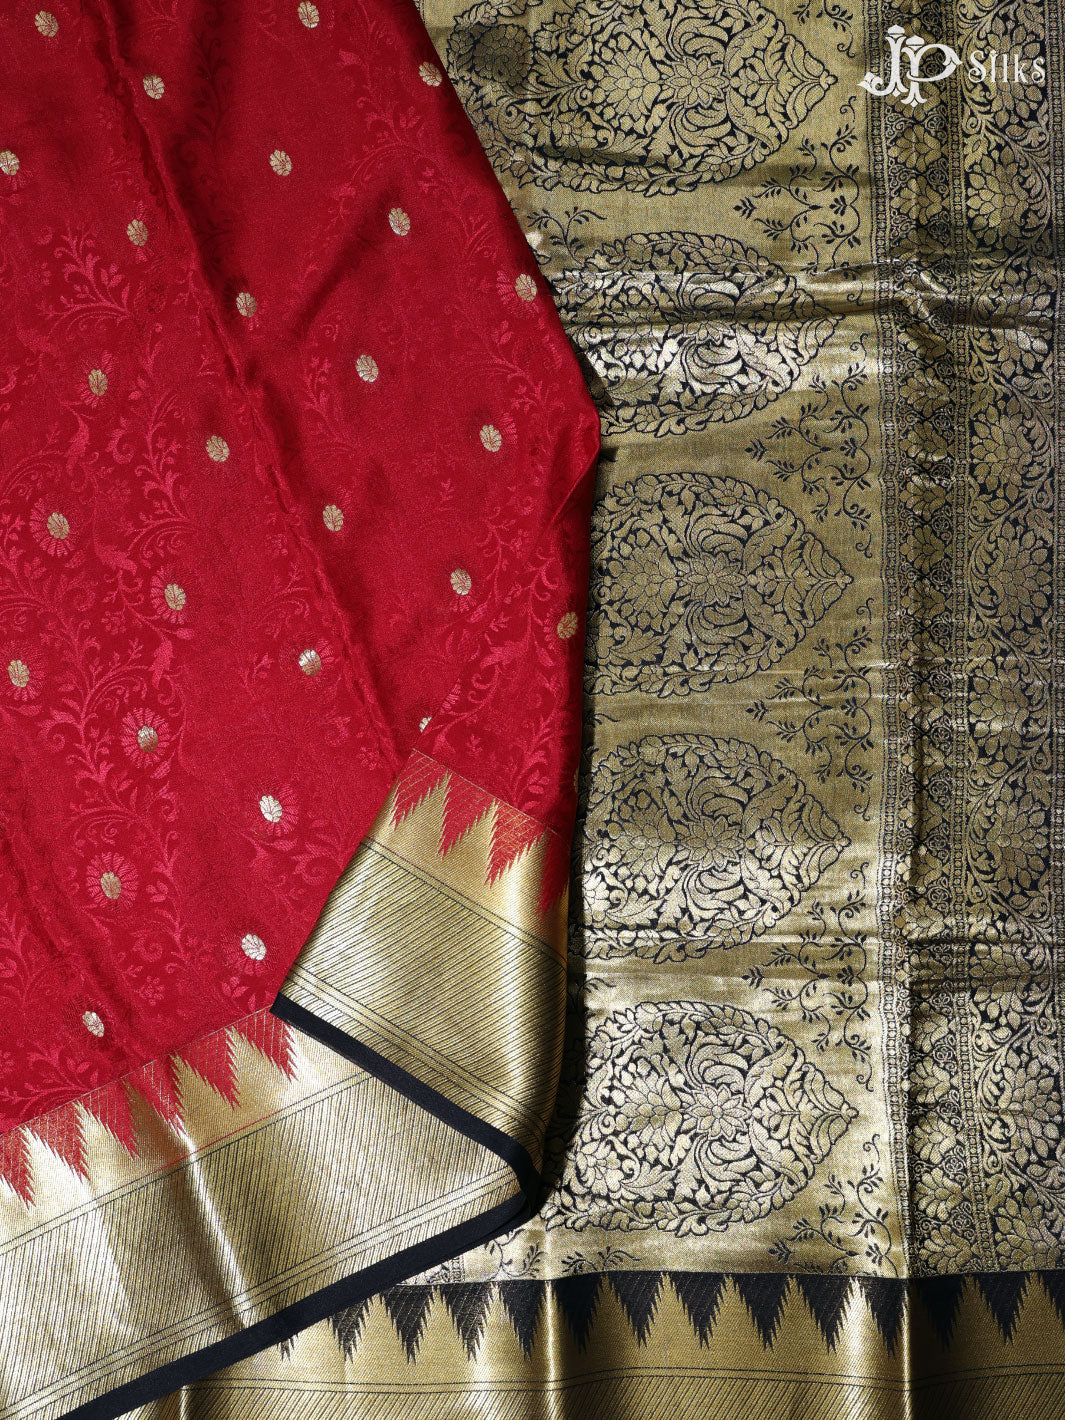 Red Mysore Silk Saree - D4817 - View 3